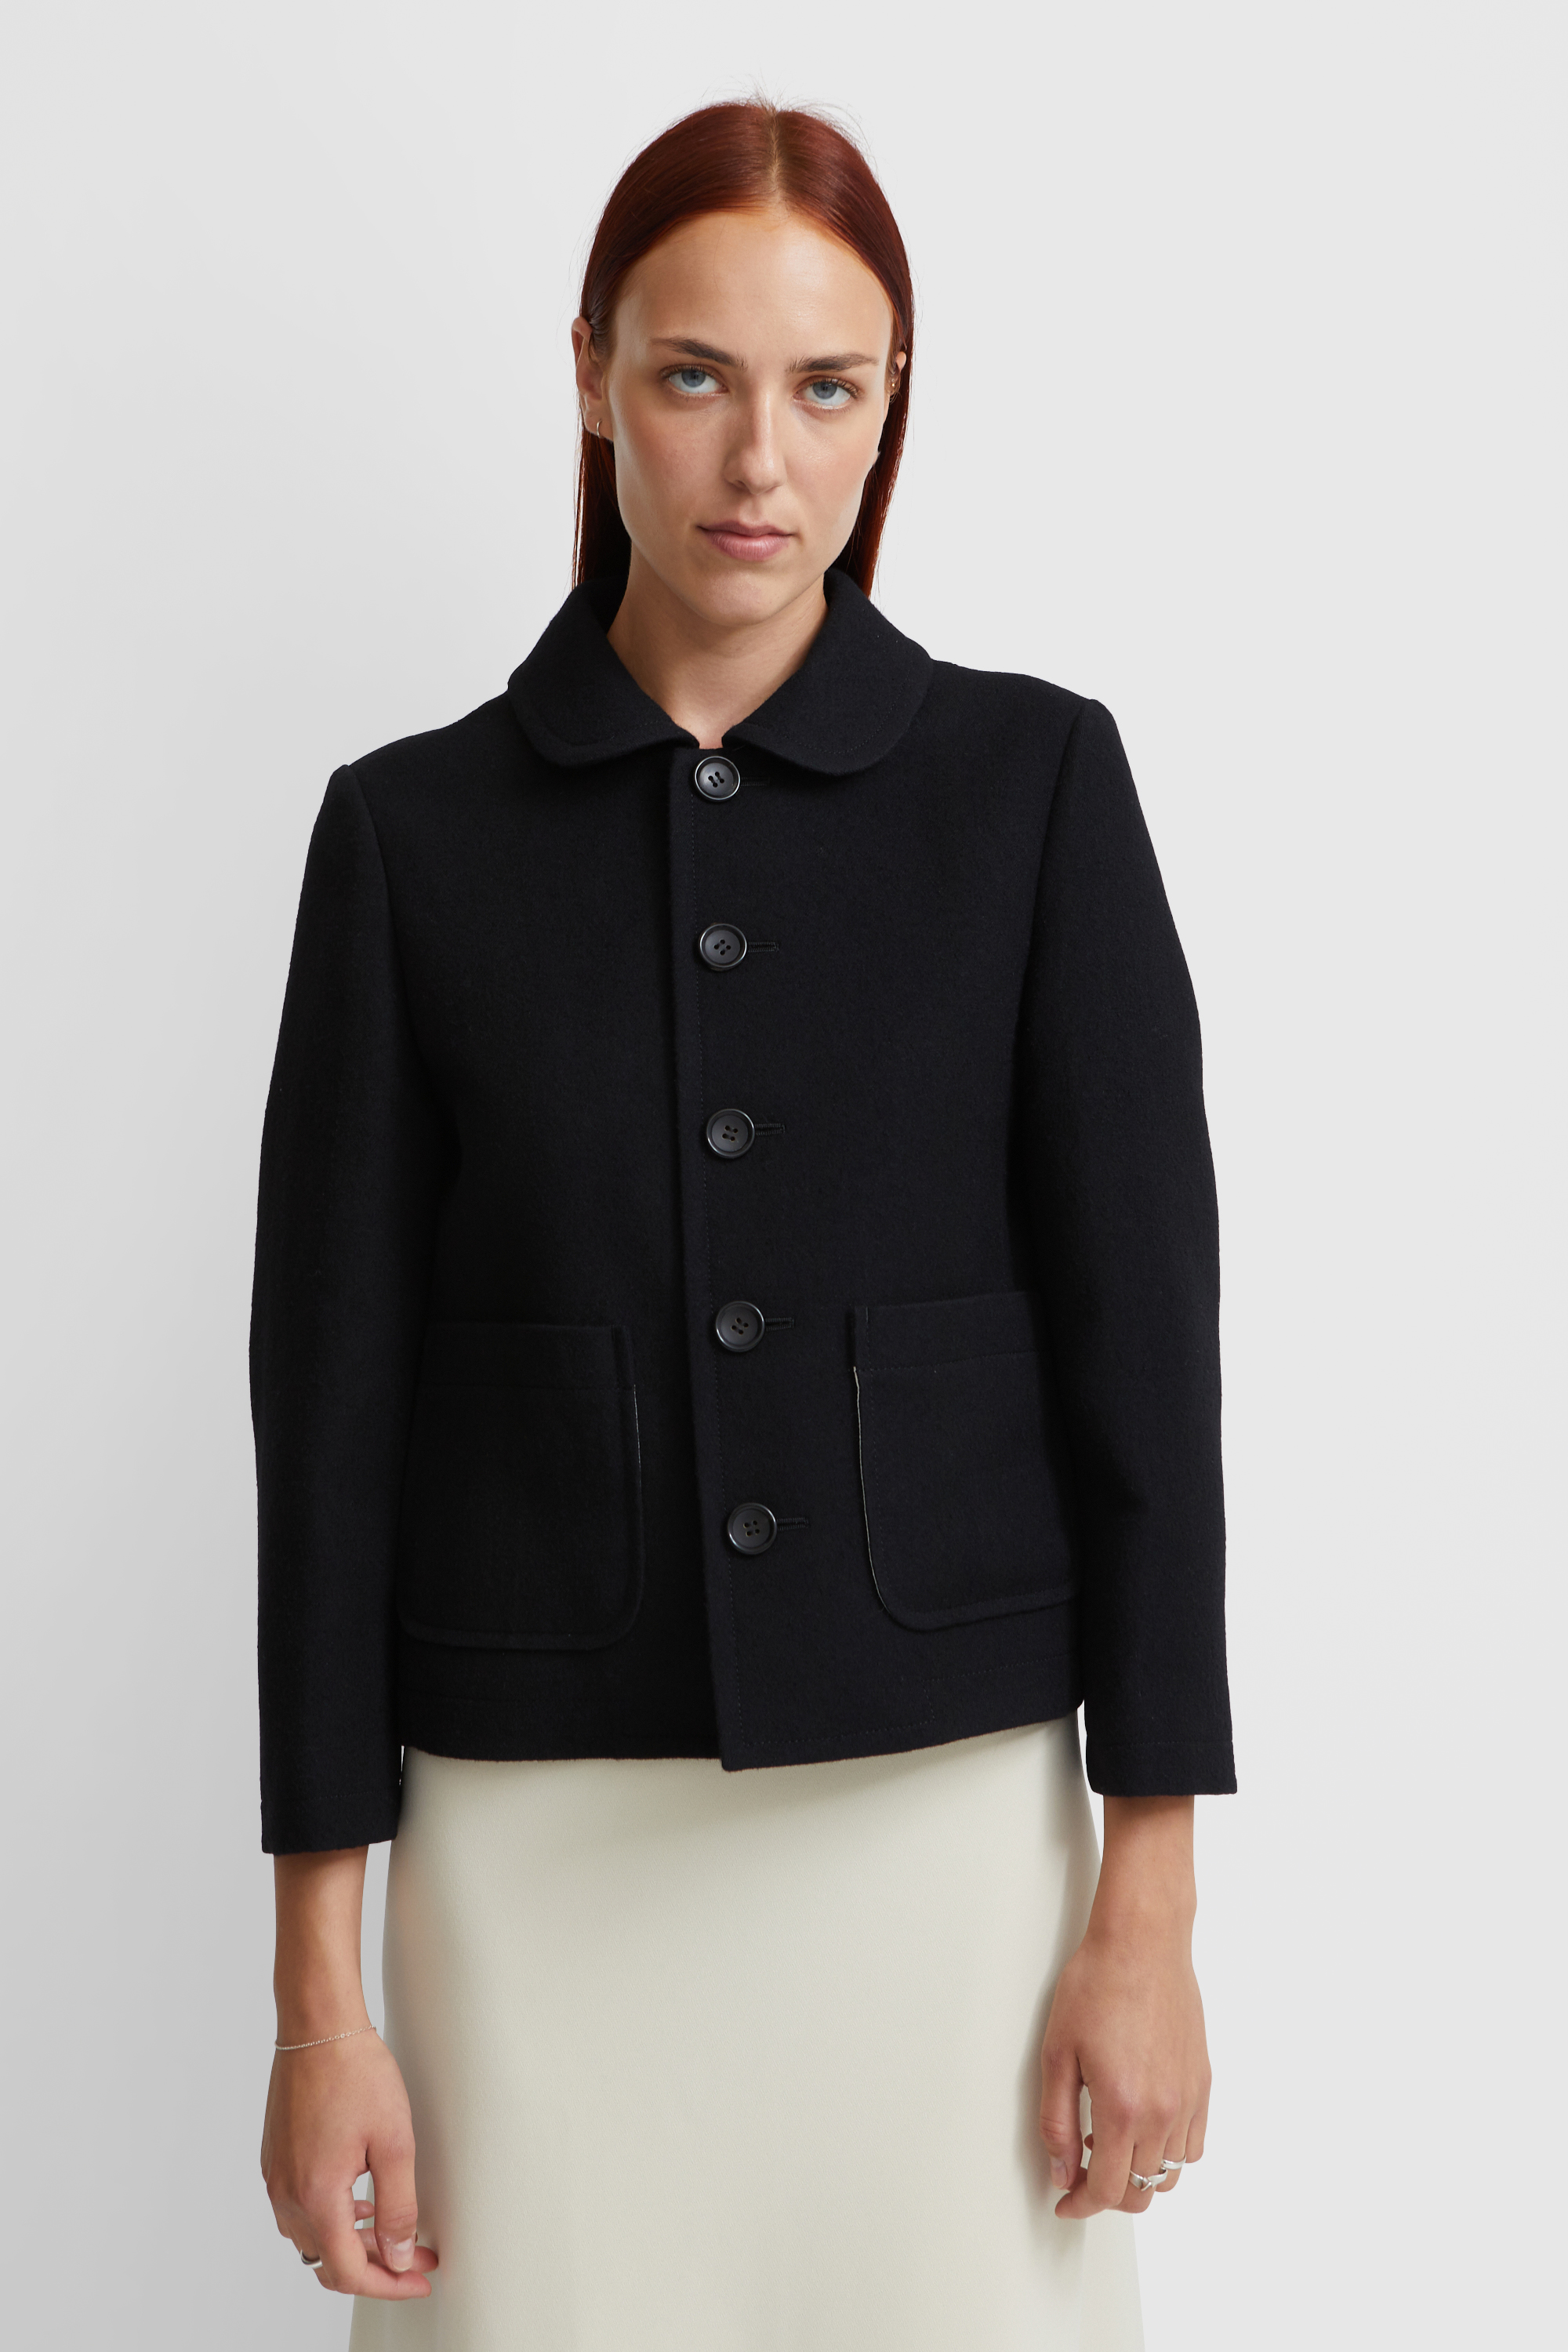 CDG Ladies' Jacket Black | WoodWood.com